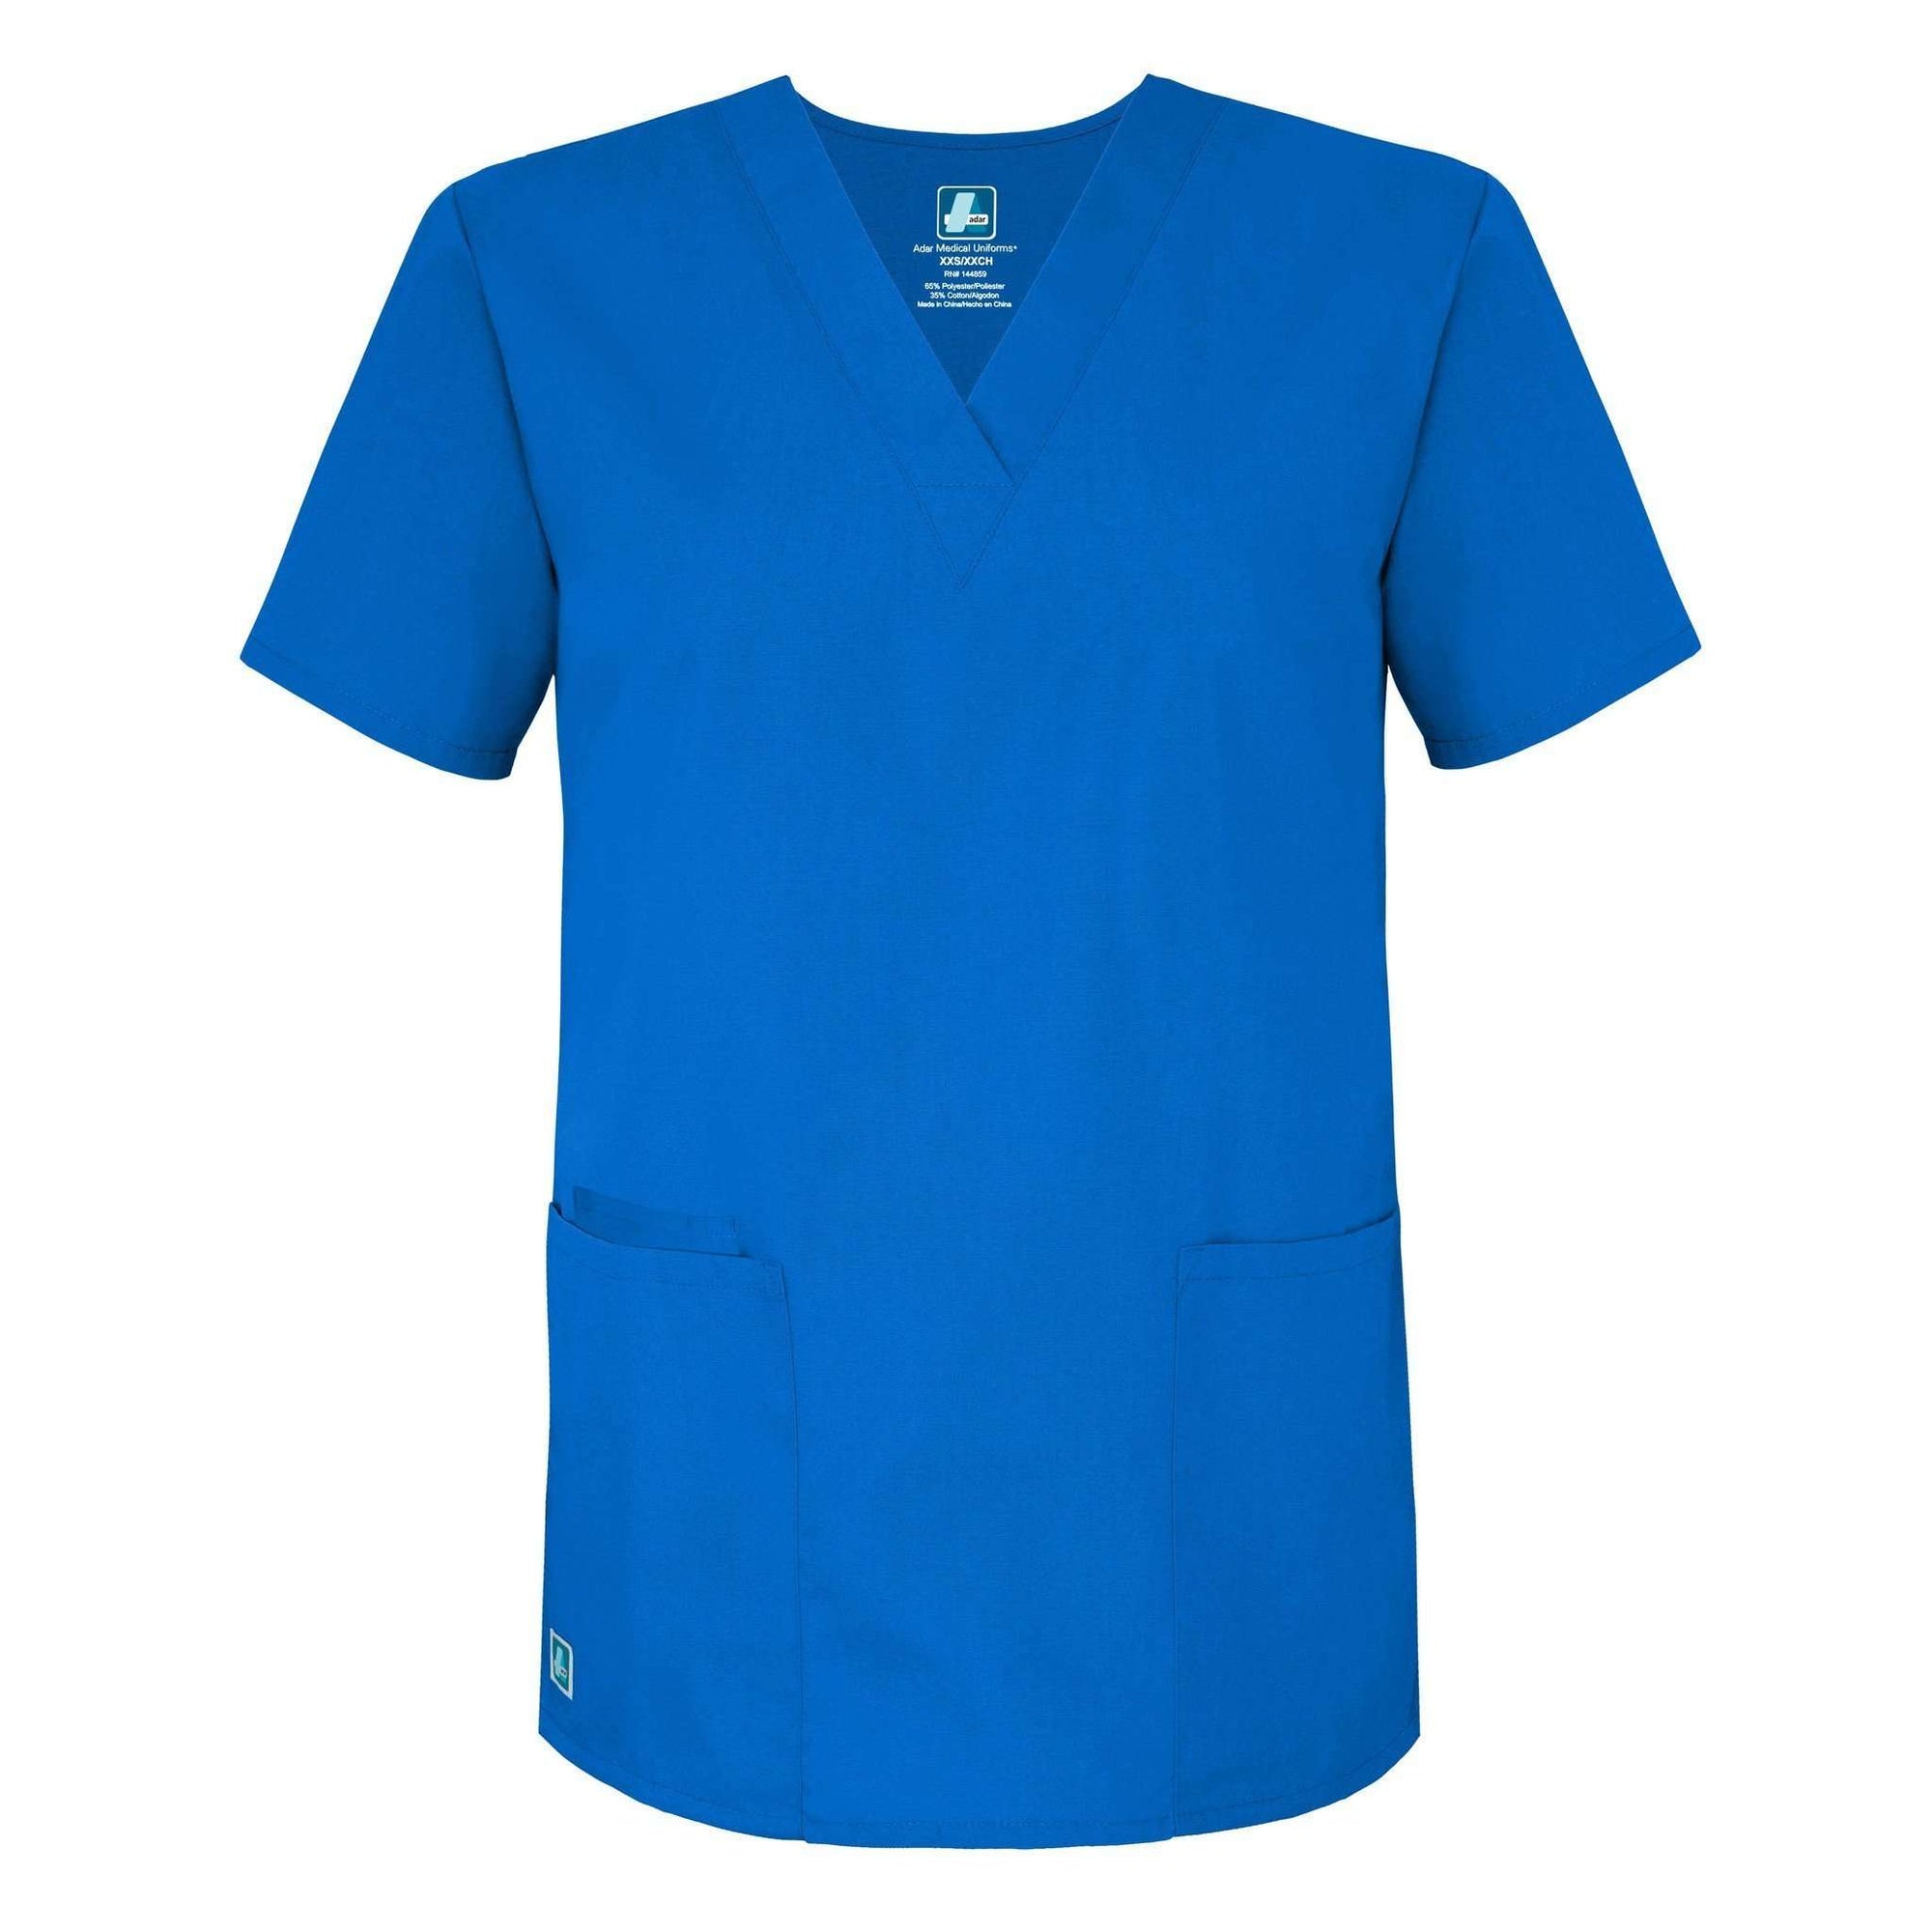  Adar - uniforms Medical Uniform Tops uniforms online Adar Universal Unisex V-Neck 2 Pocket Scrub Top Regal Blue M - SchoolUniforms.com